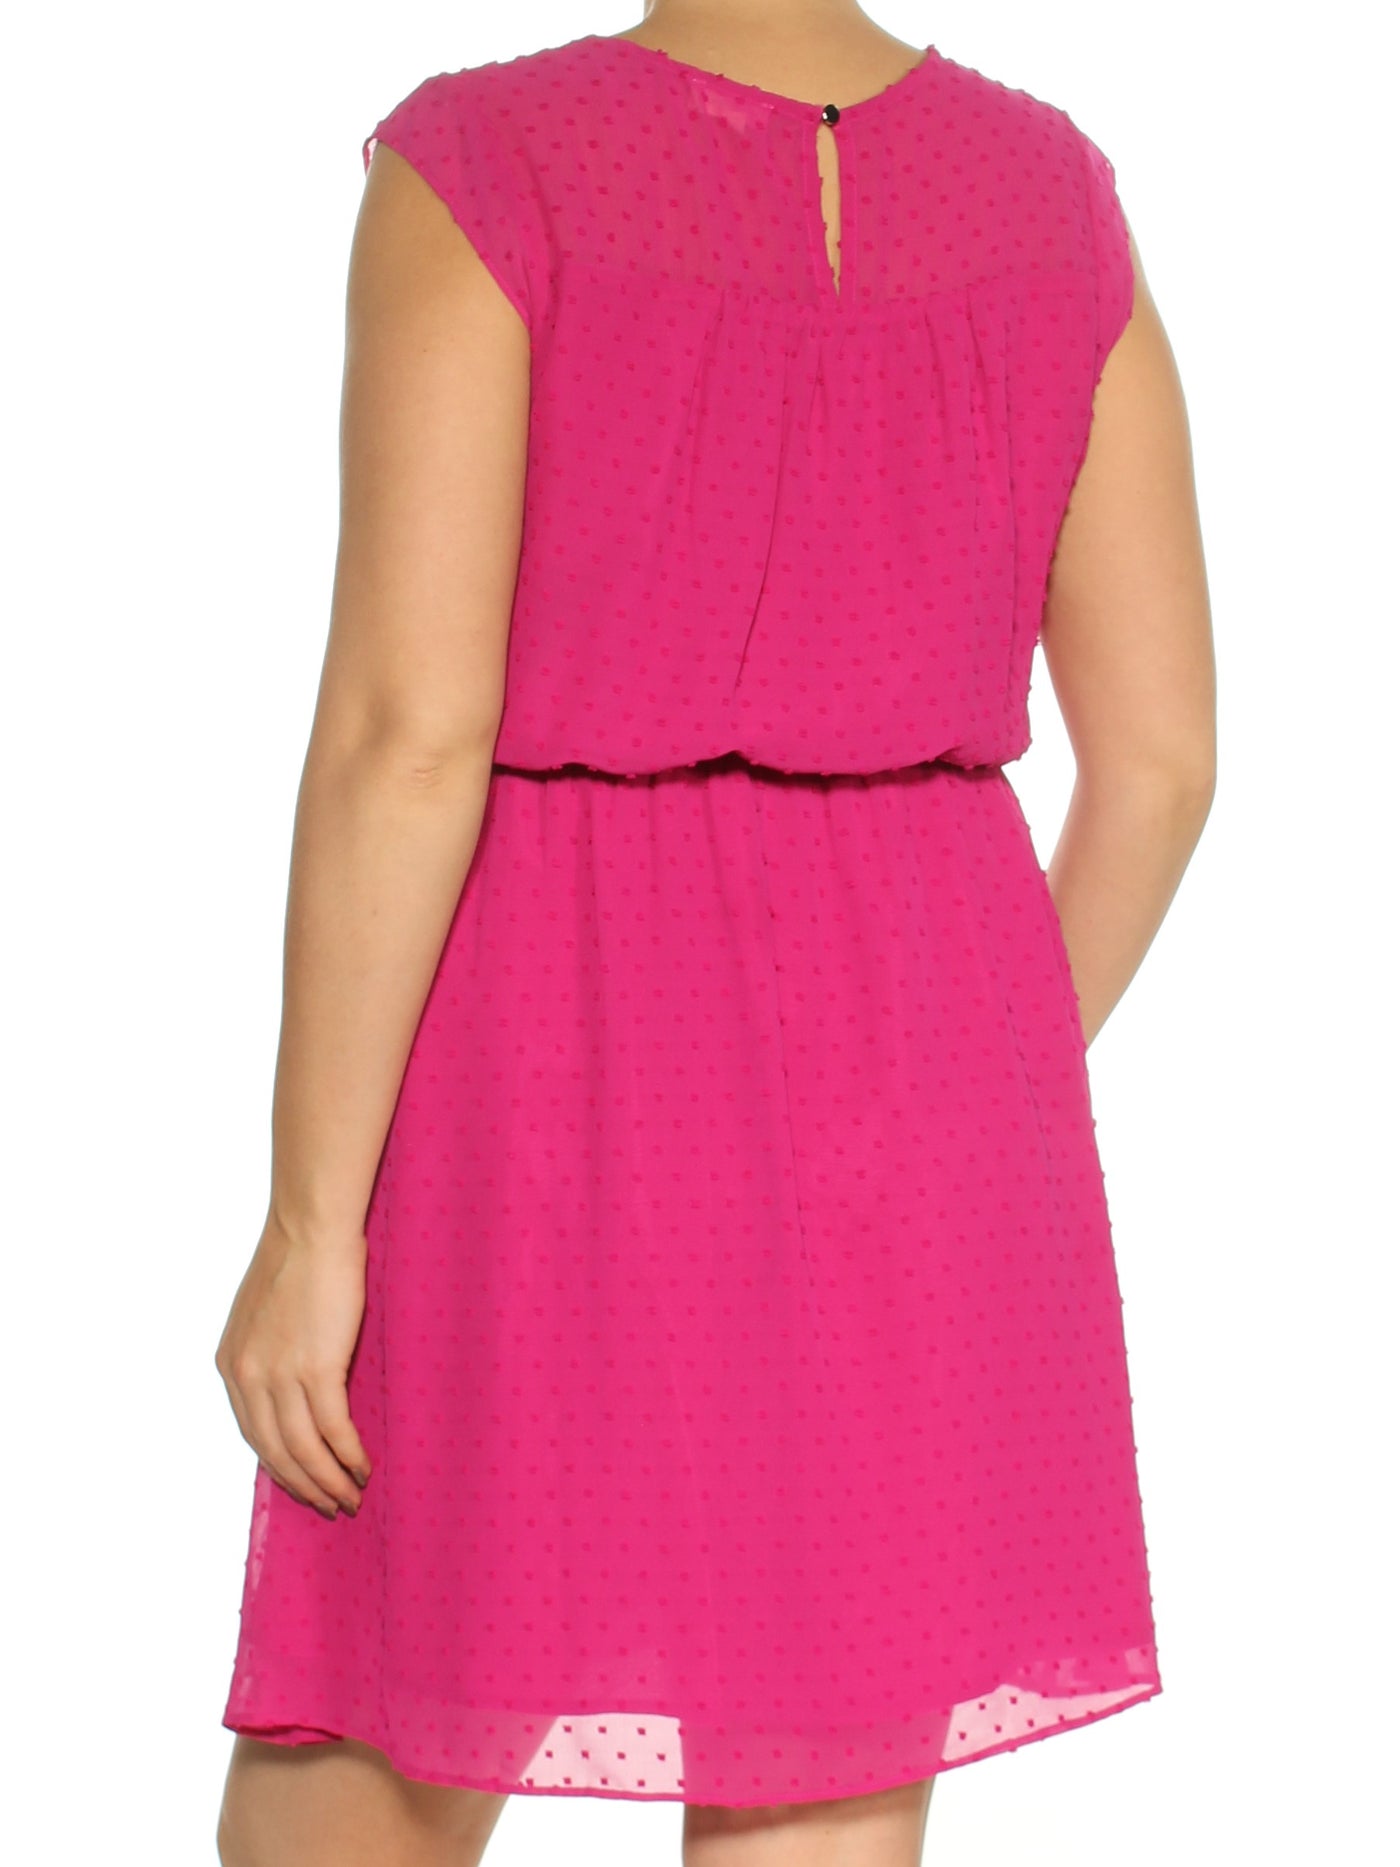 MAISON JULES Womens Pink Textured Ruffled Sleeveless Jewel Neck Above The Knee Blouson Dress XL